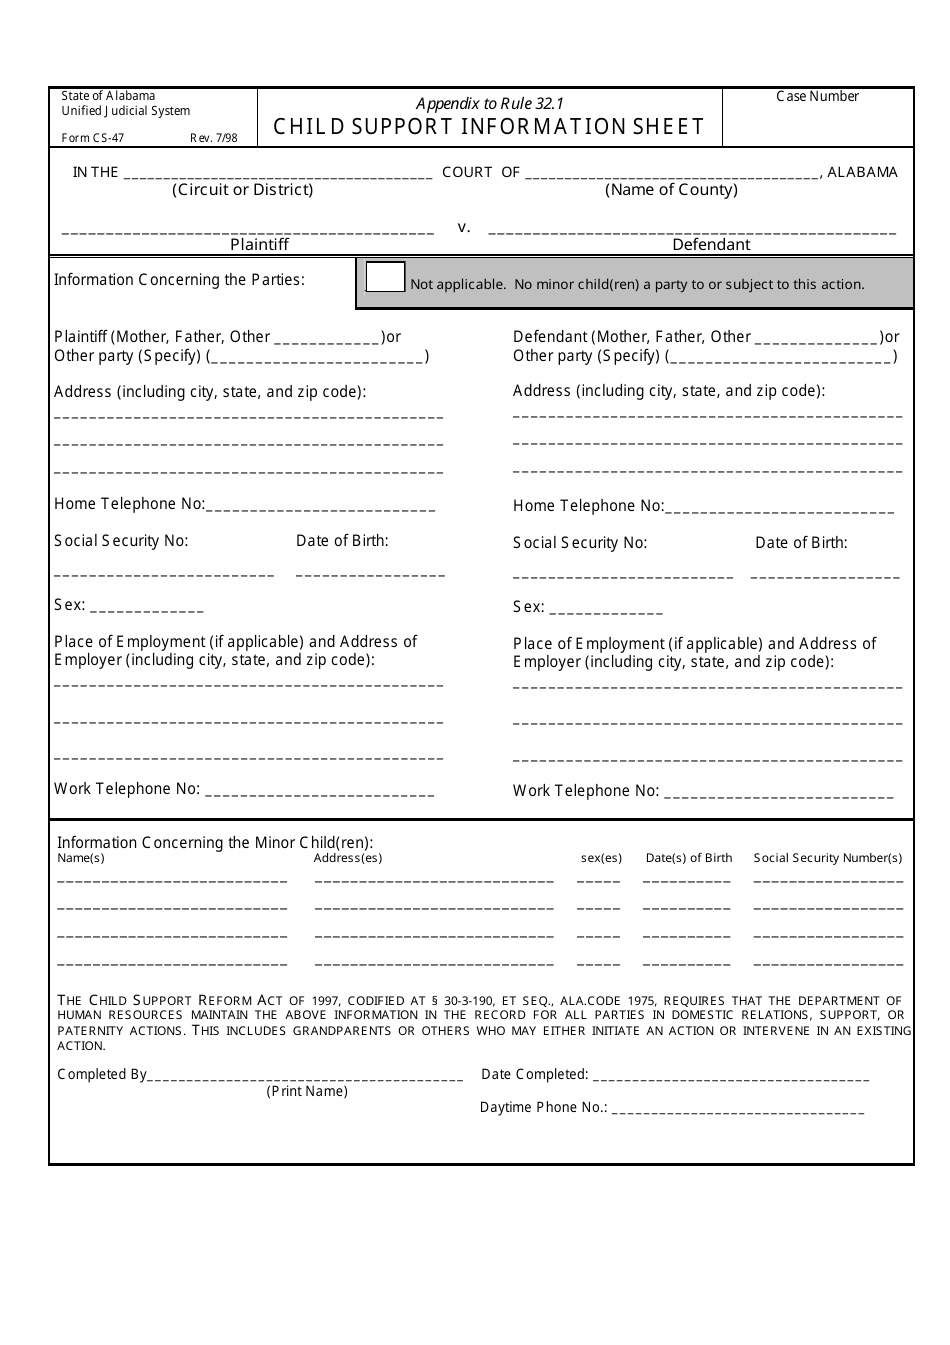 Form CS-47 Child Support Information Sheet - Alabama, Page 1